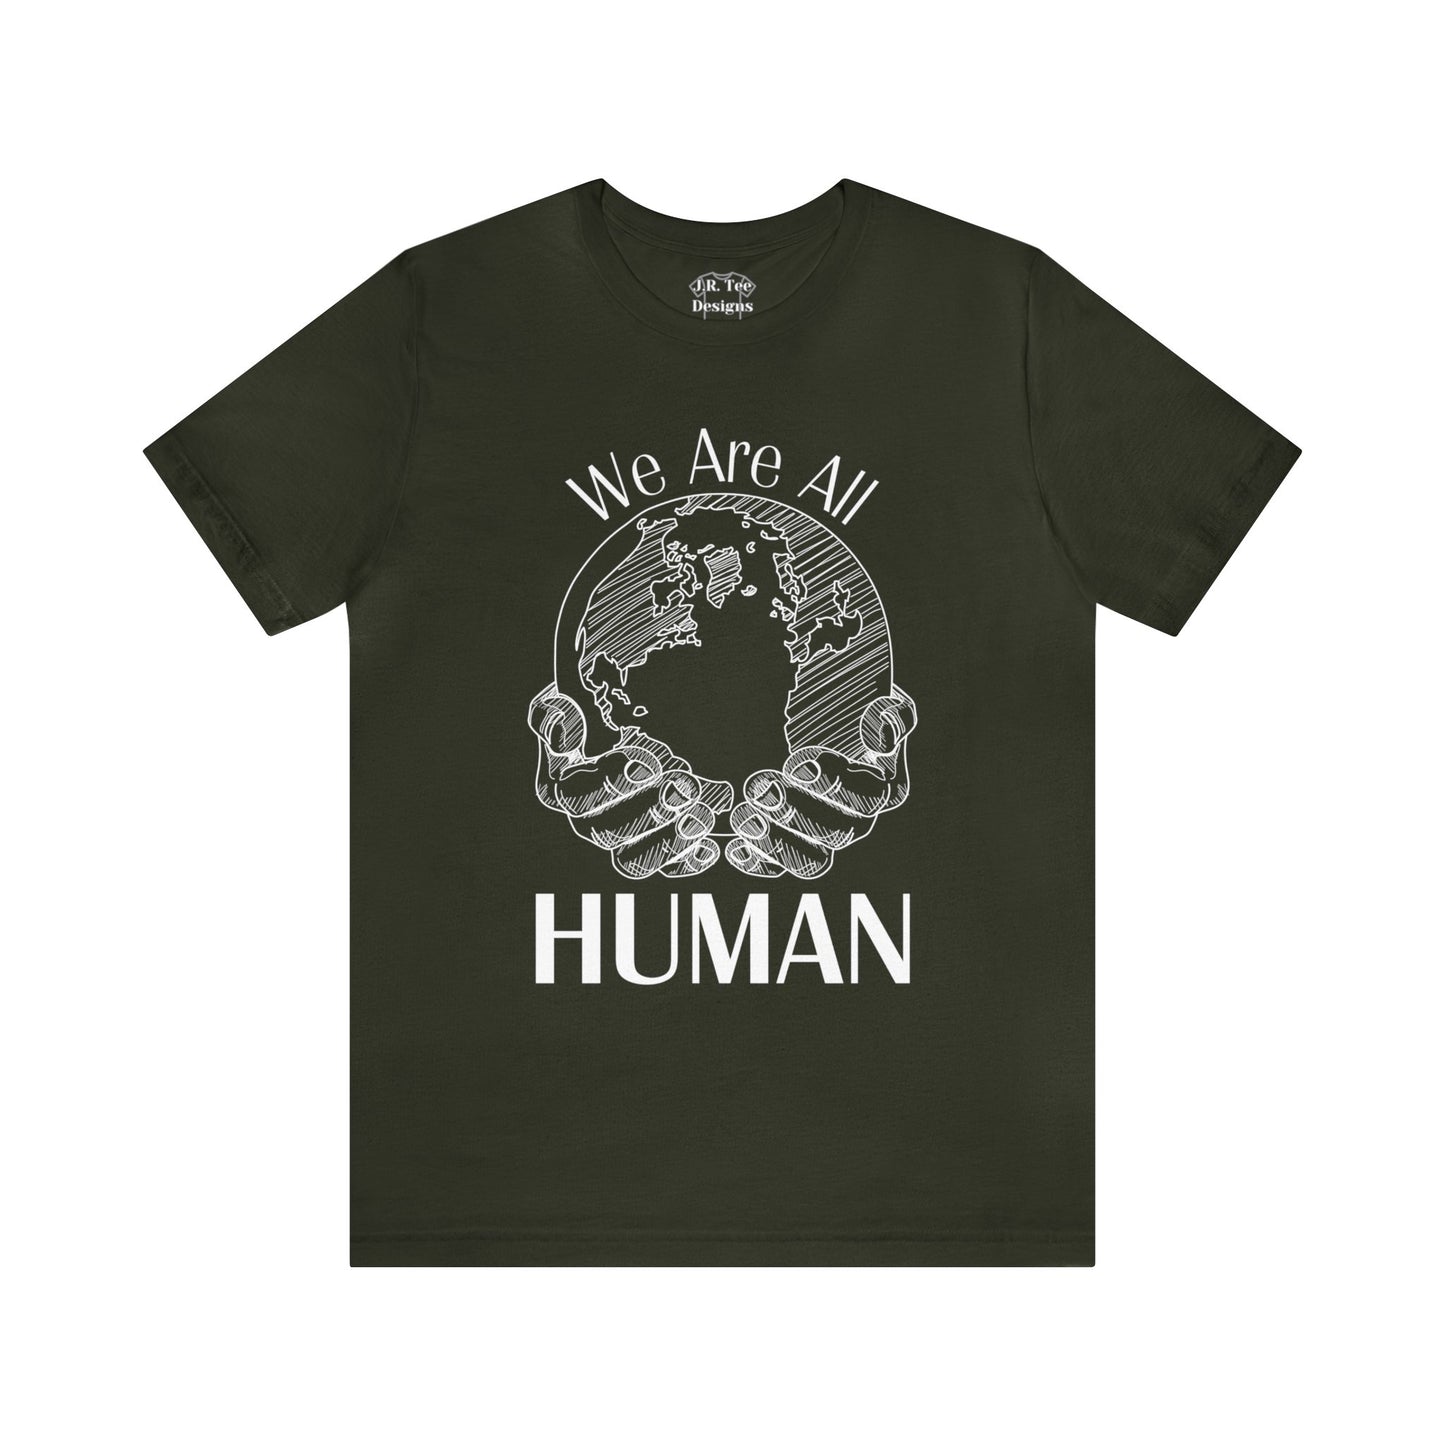 We Are Human Tee